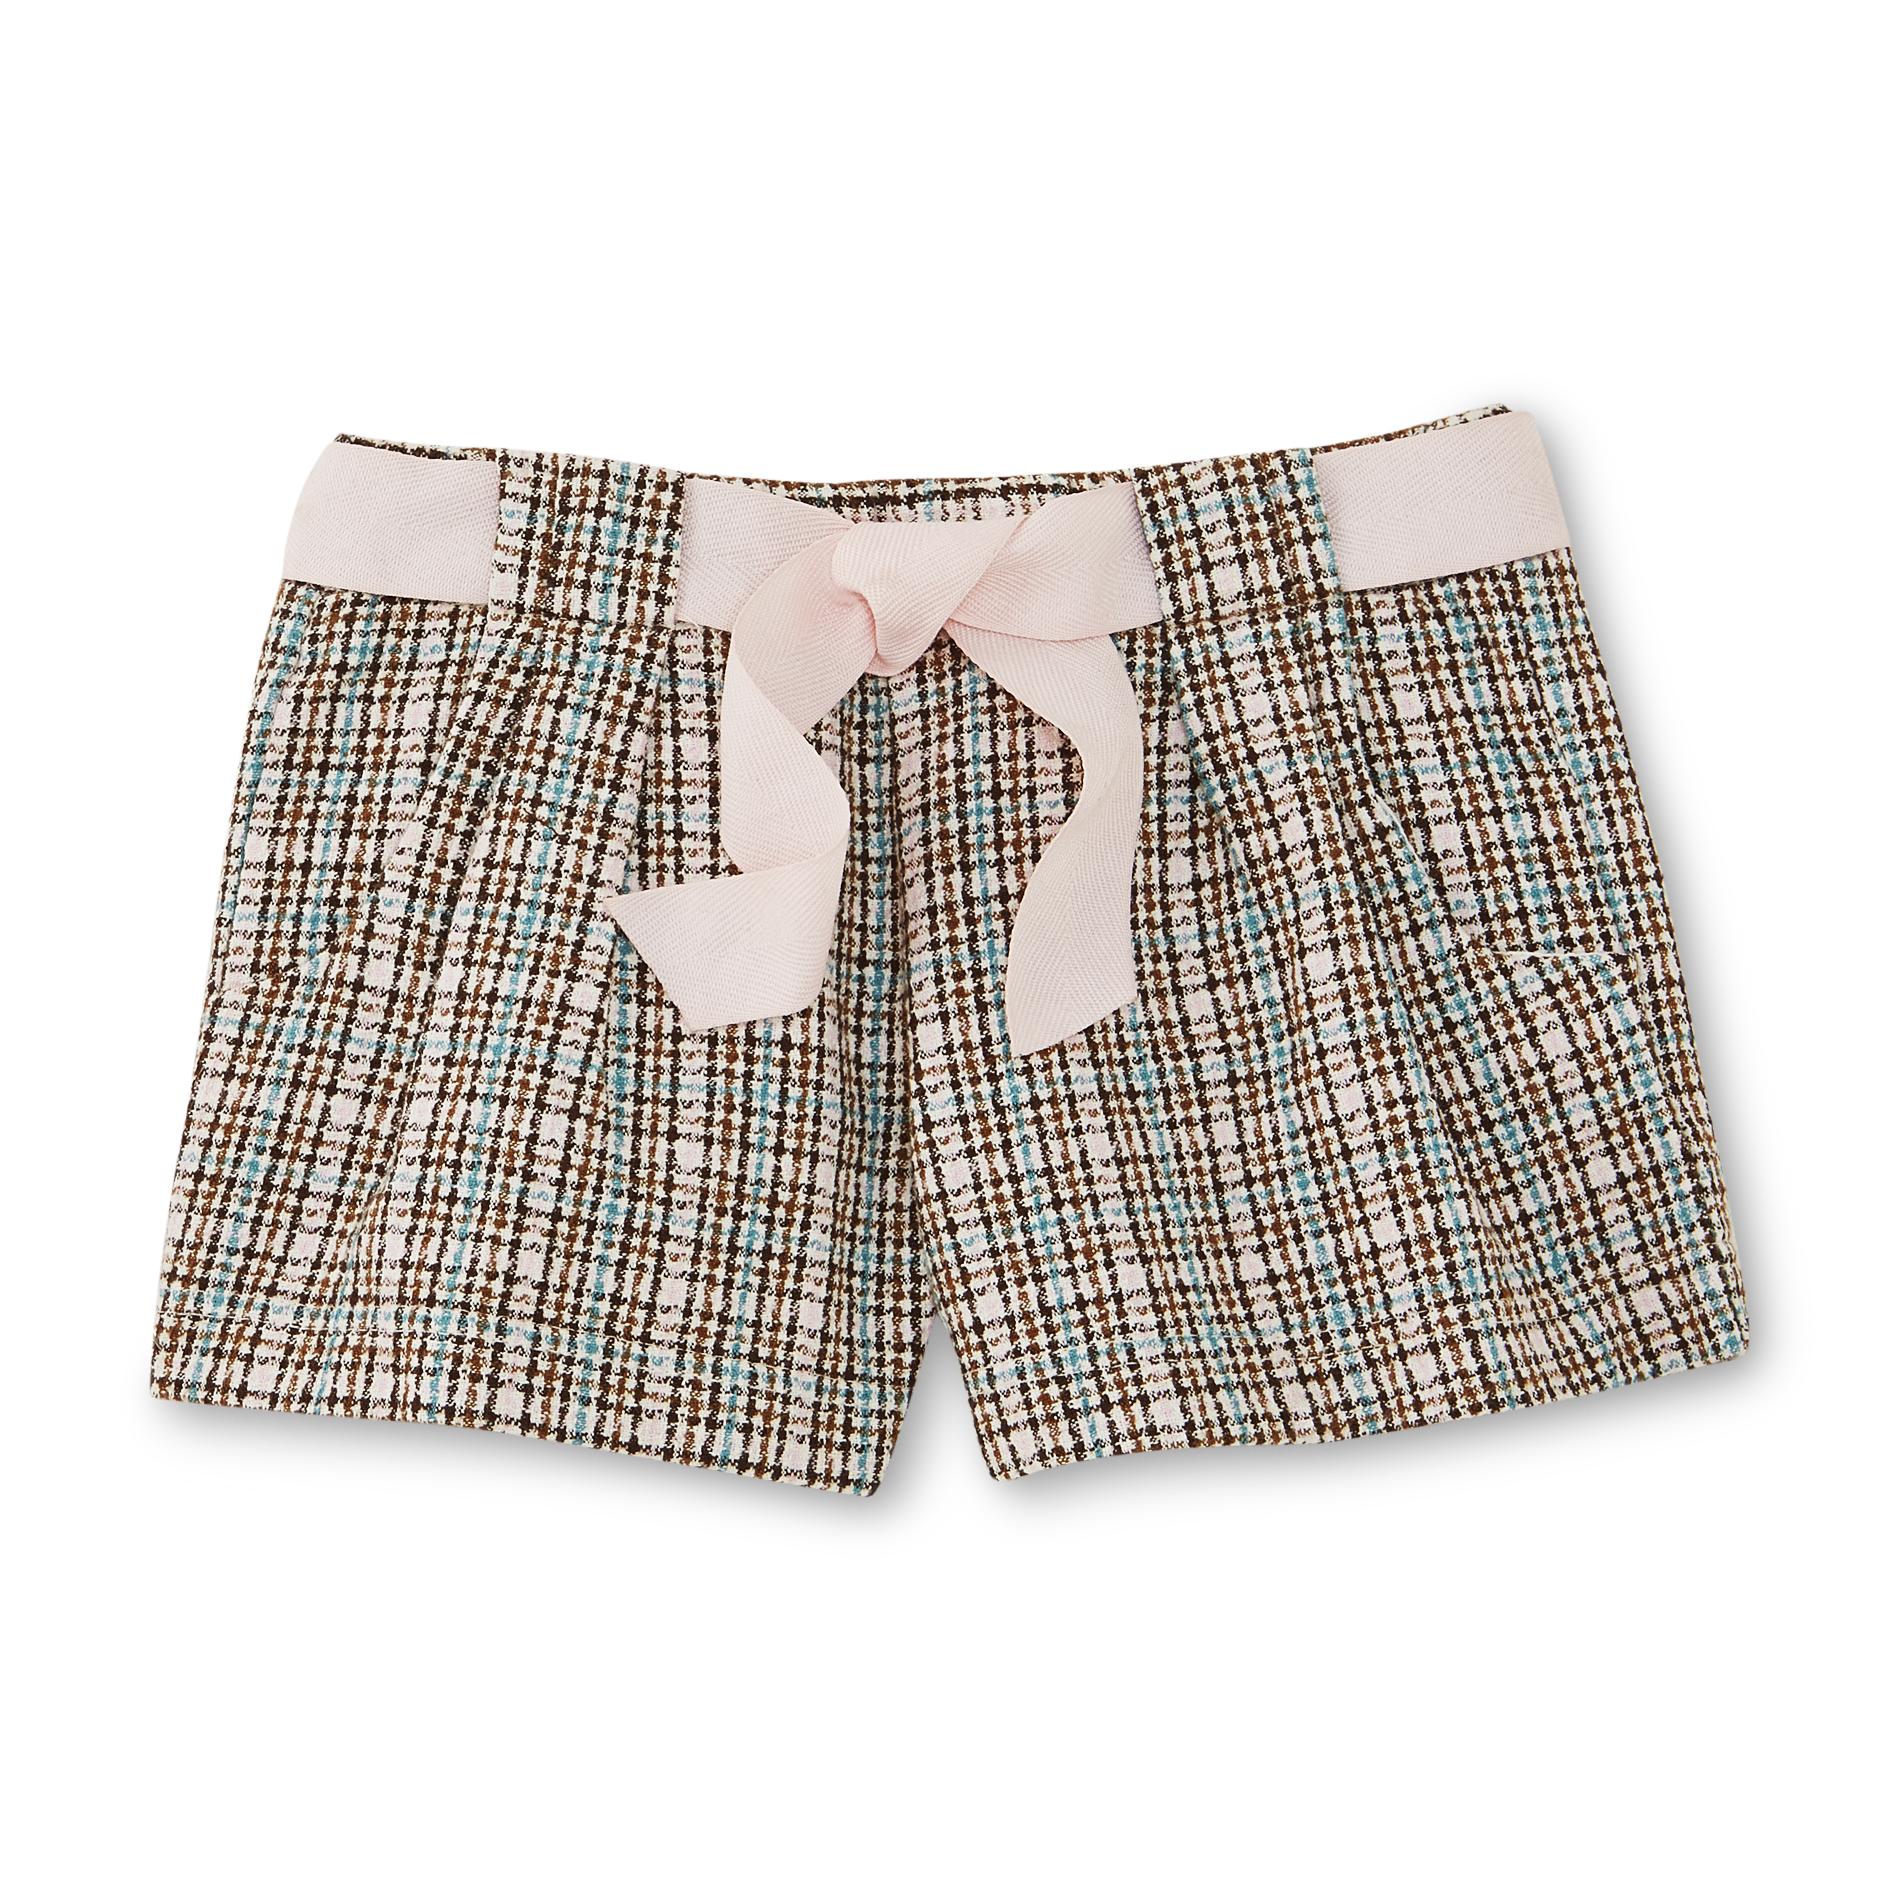 Toughskins Infant & Toddler Girl's Tweed Shorts - Plaid